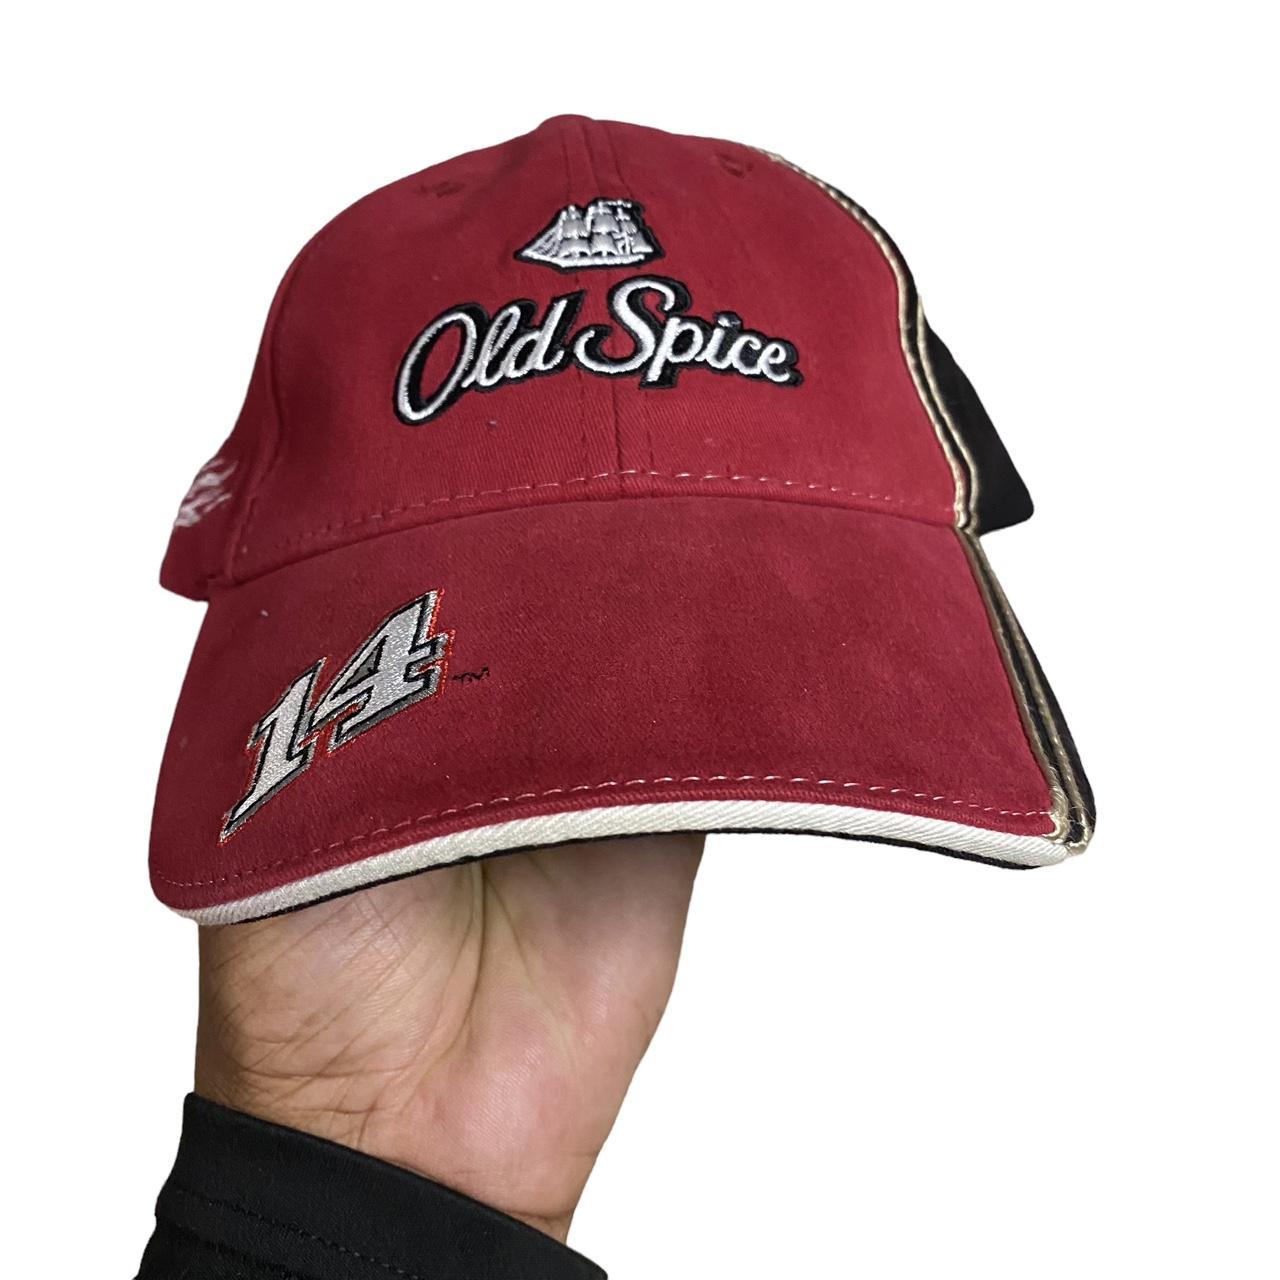 - Oldspice Depop fitted flex Tony Stewart fit NASCAR one... hat